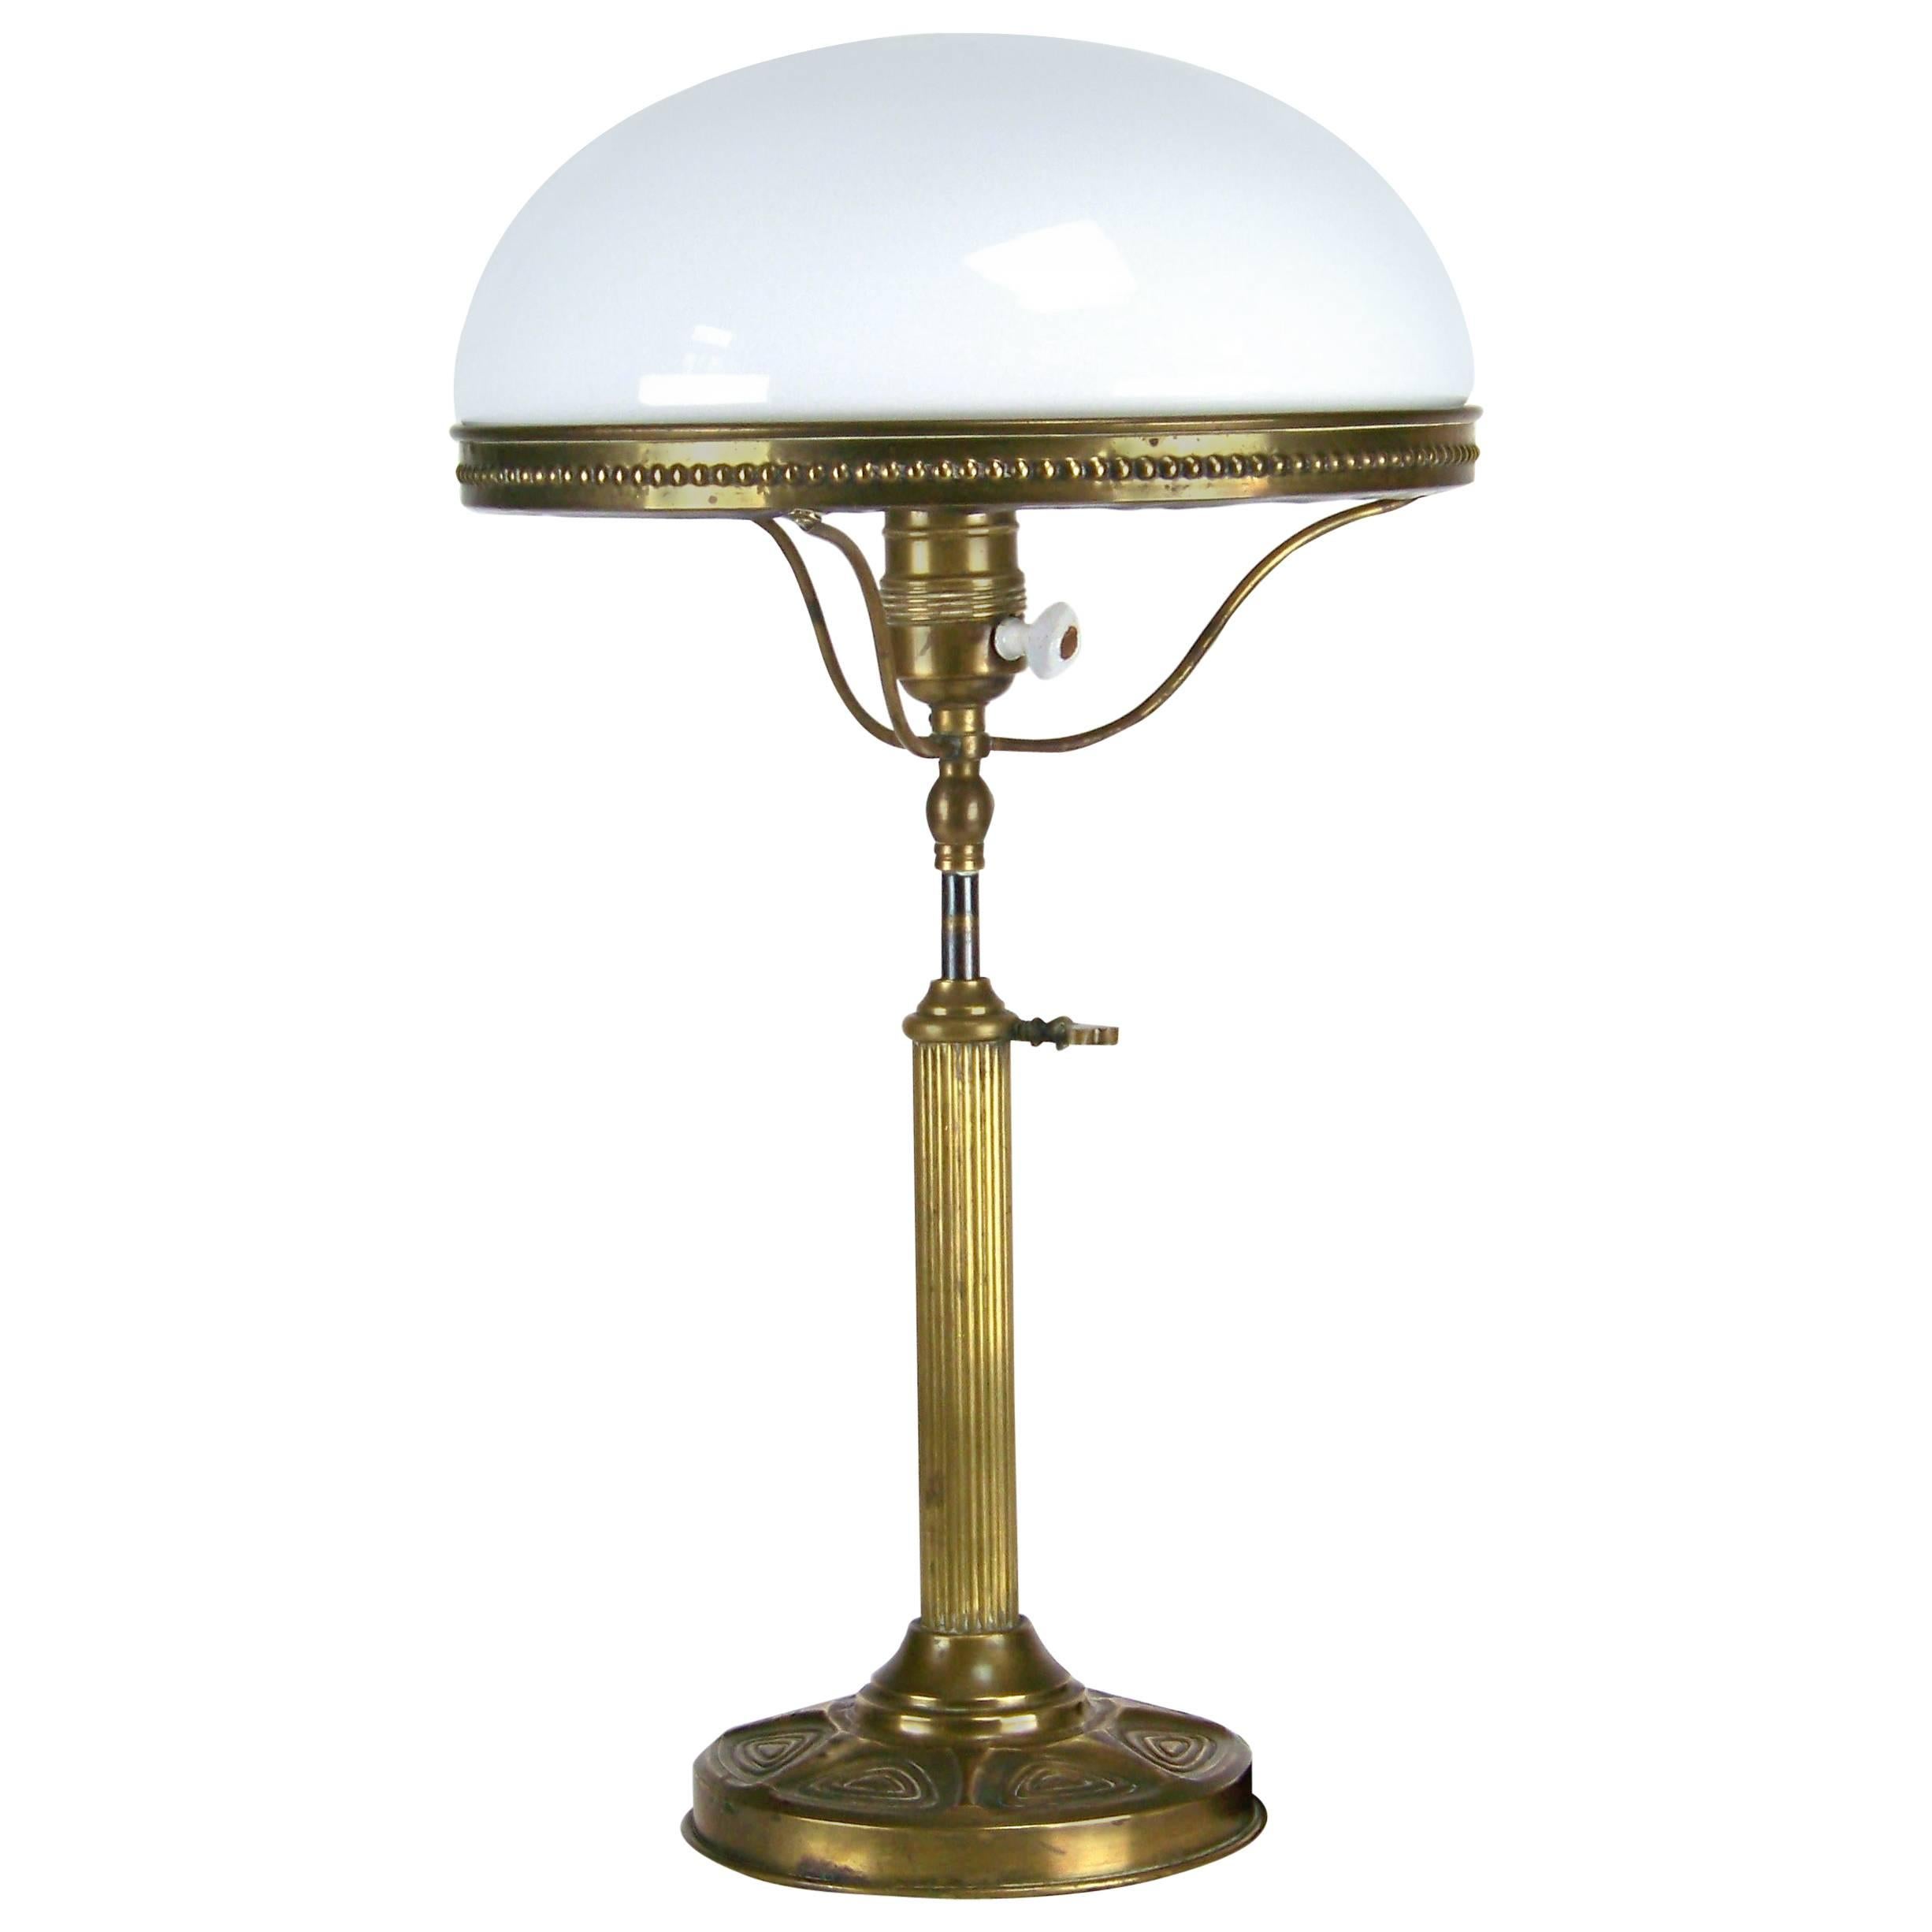 Art Nouveau Table Lamp, circa 1910